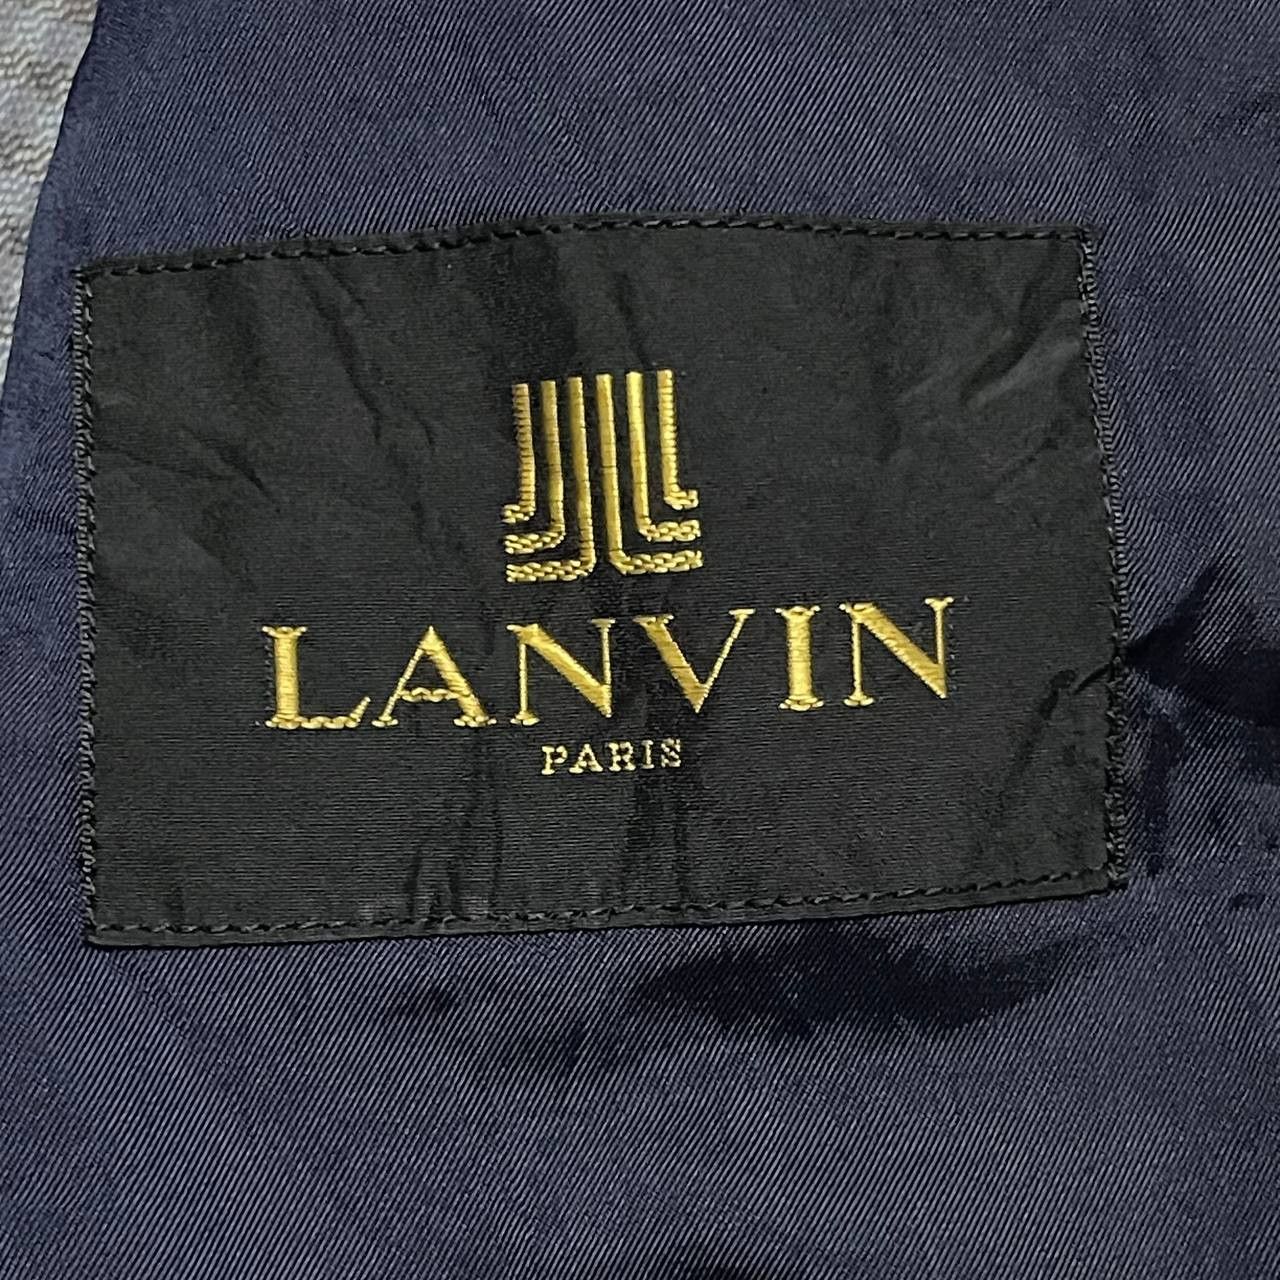 Vintage Lanvin Paris Luxury Blazer Coat - 9